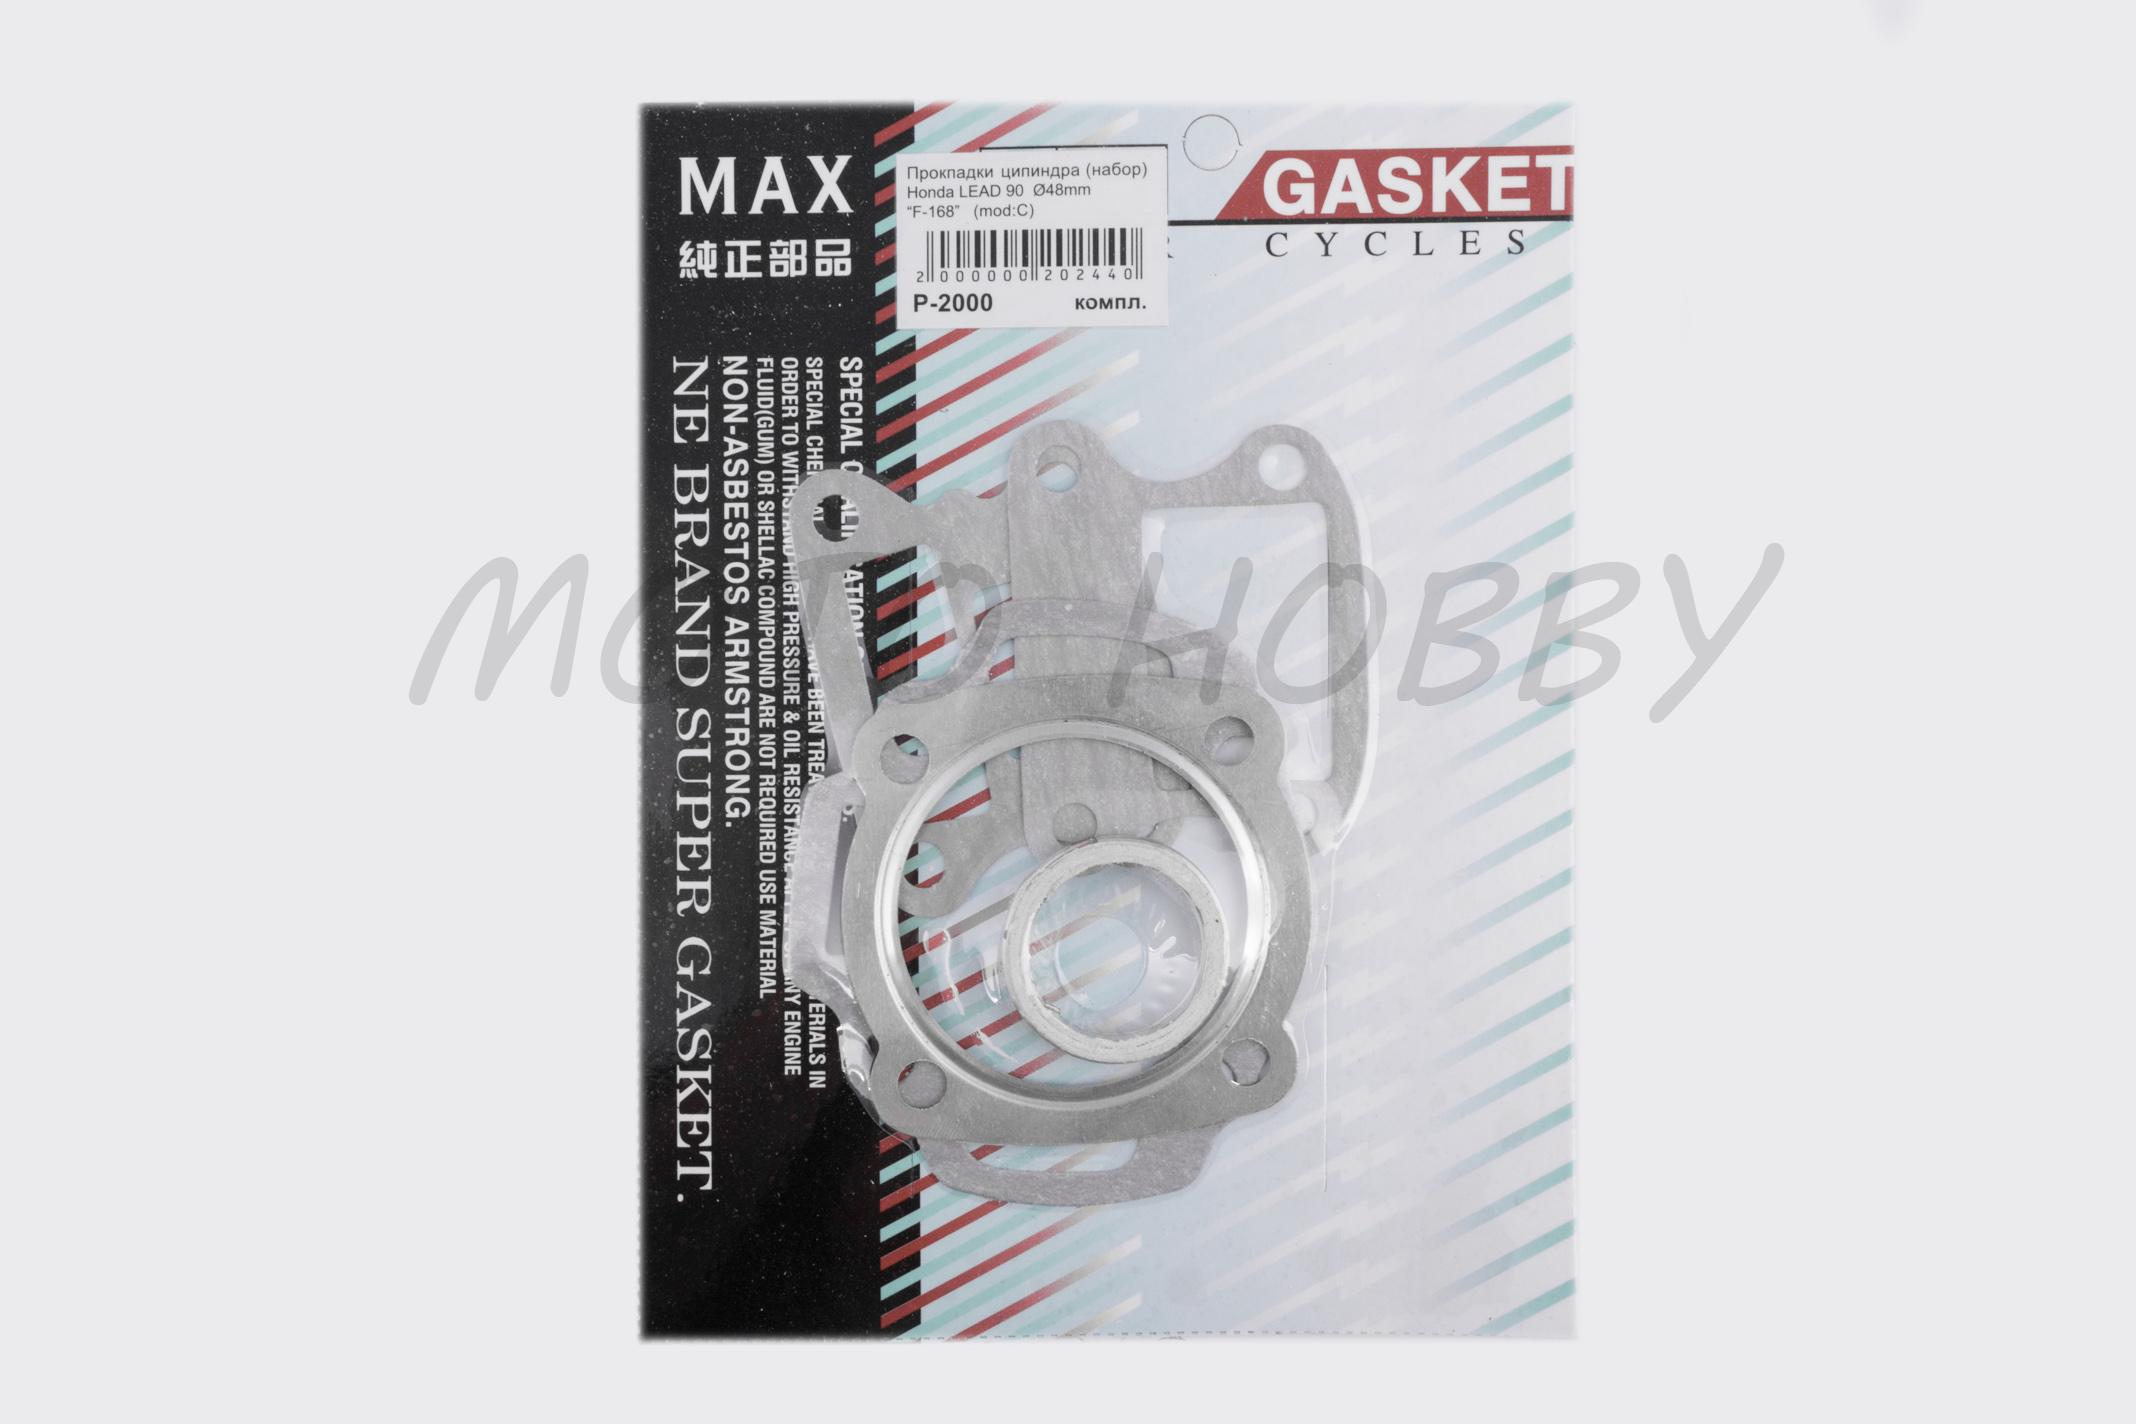   ()   Honda LEAD 90   ?48mm   (mod C)   MAX GASKETS P-2000